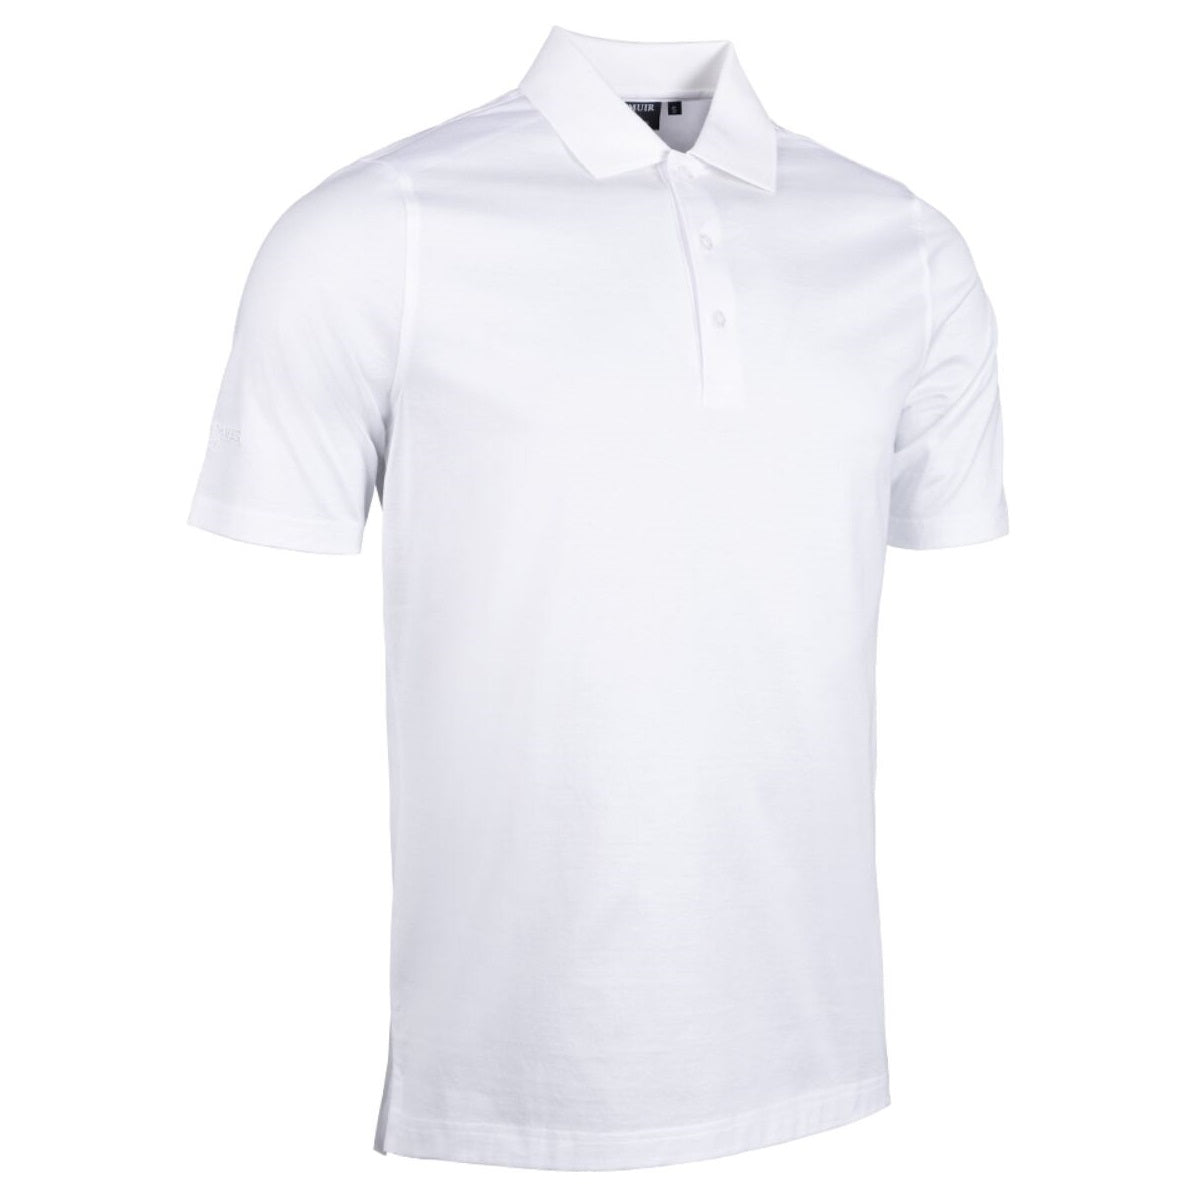 GLENMUIR Tarth Mercerised Cotton Polo Shirt - Mens - White